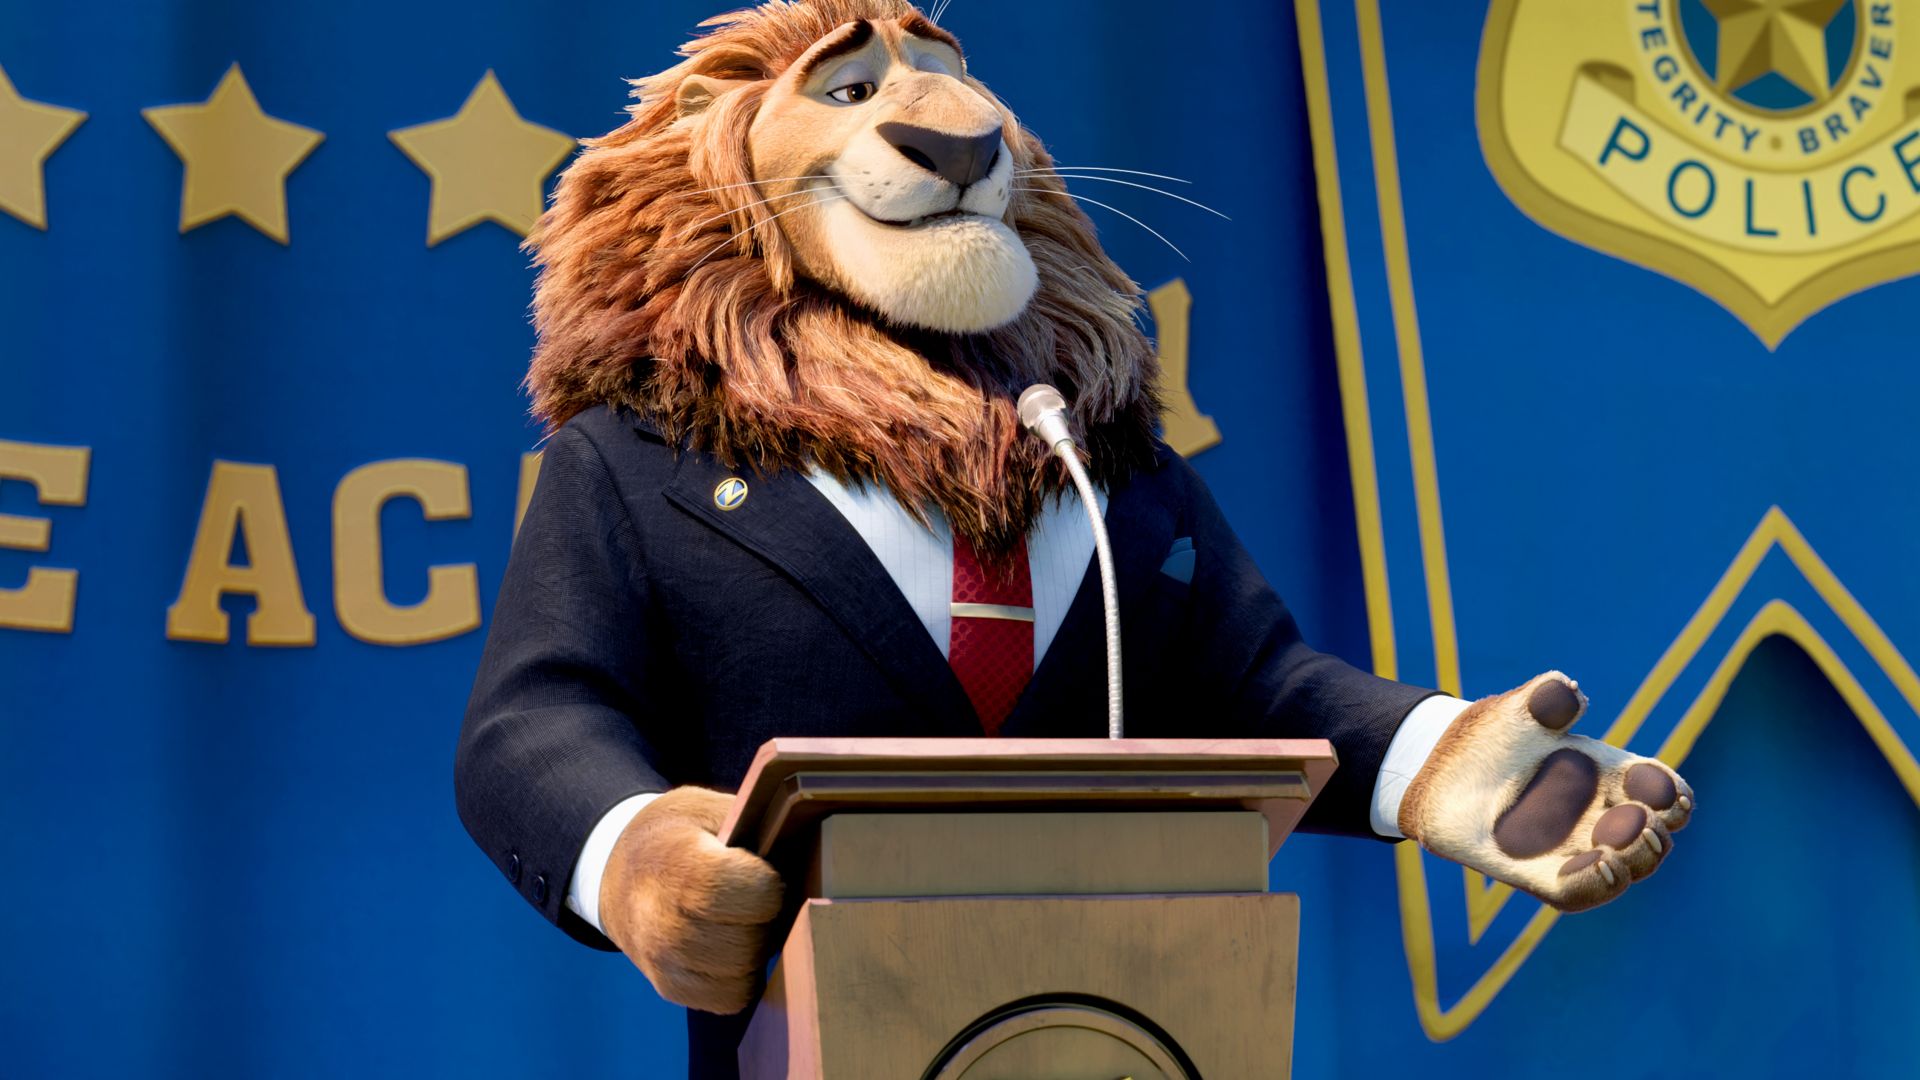 Zootopia, Mayor Lionheart, Lion, Best Animation Movies of 2016, cartoon (horizontal)